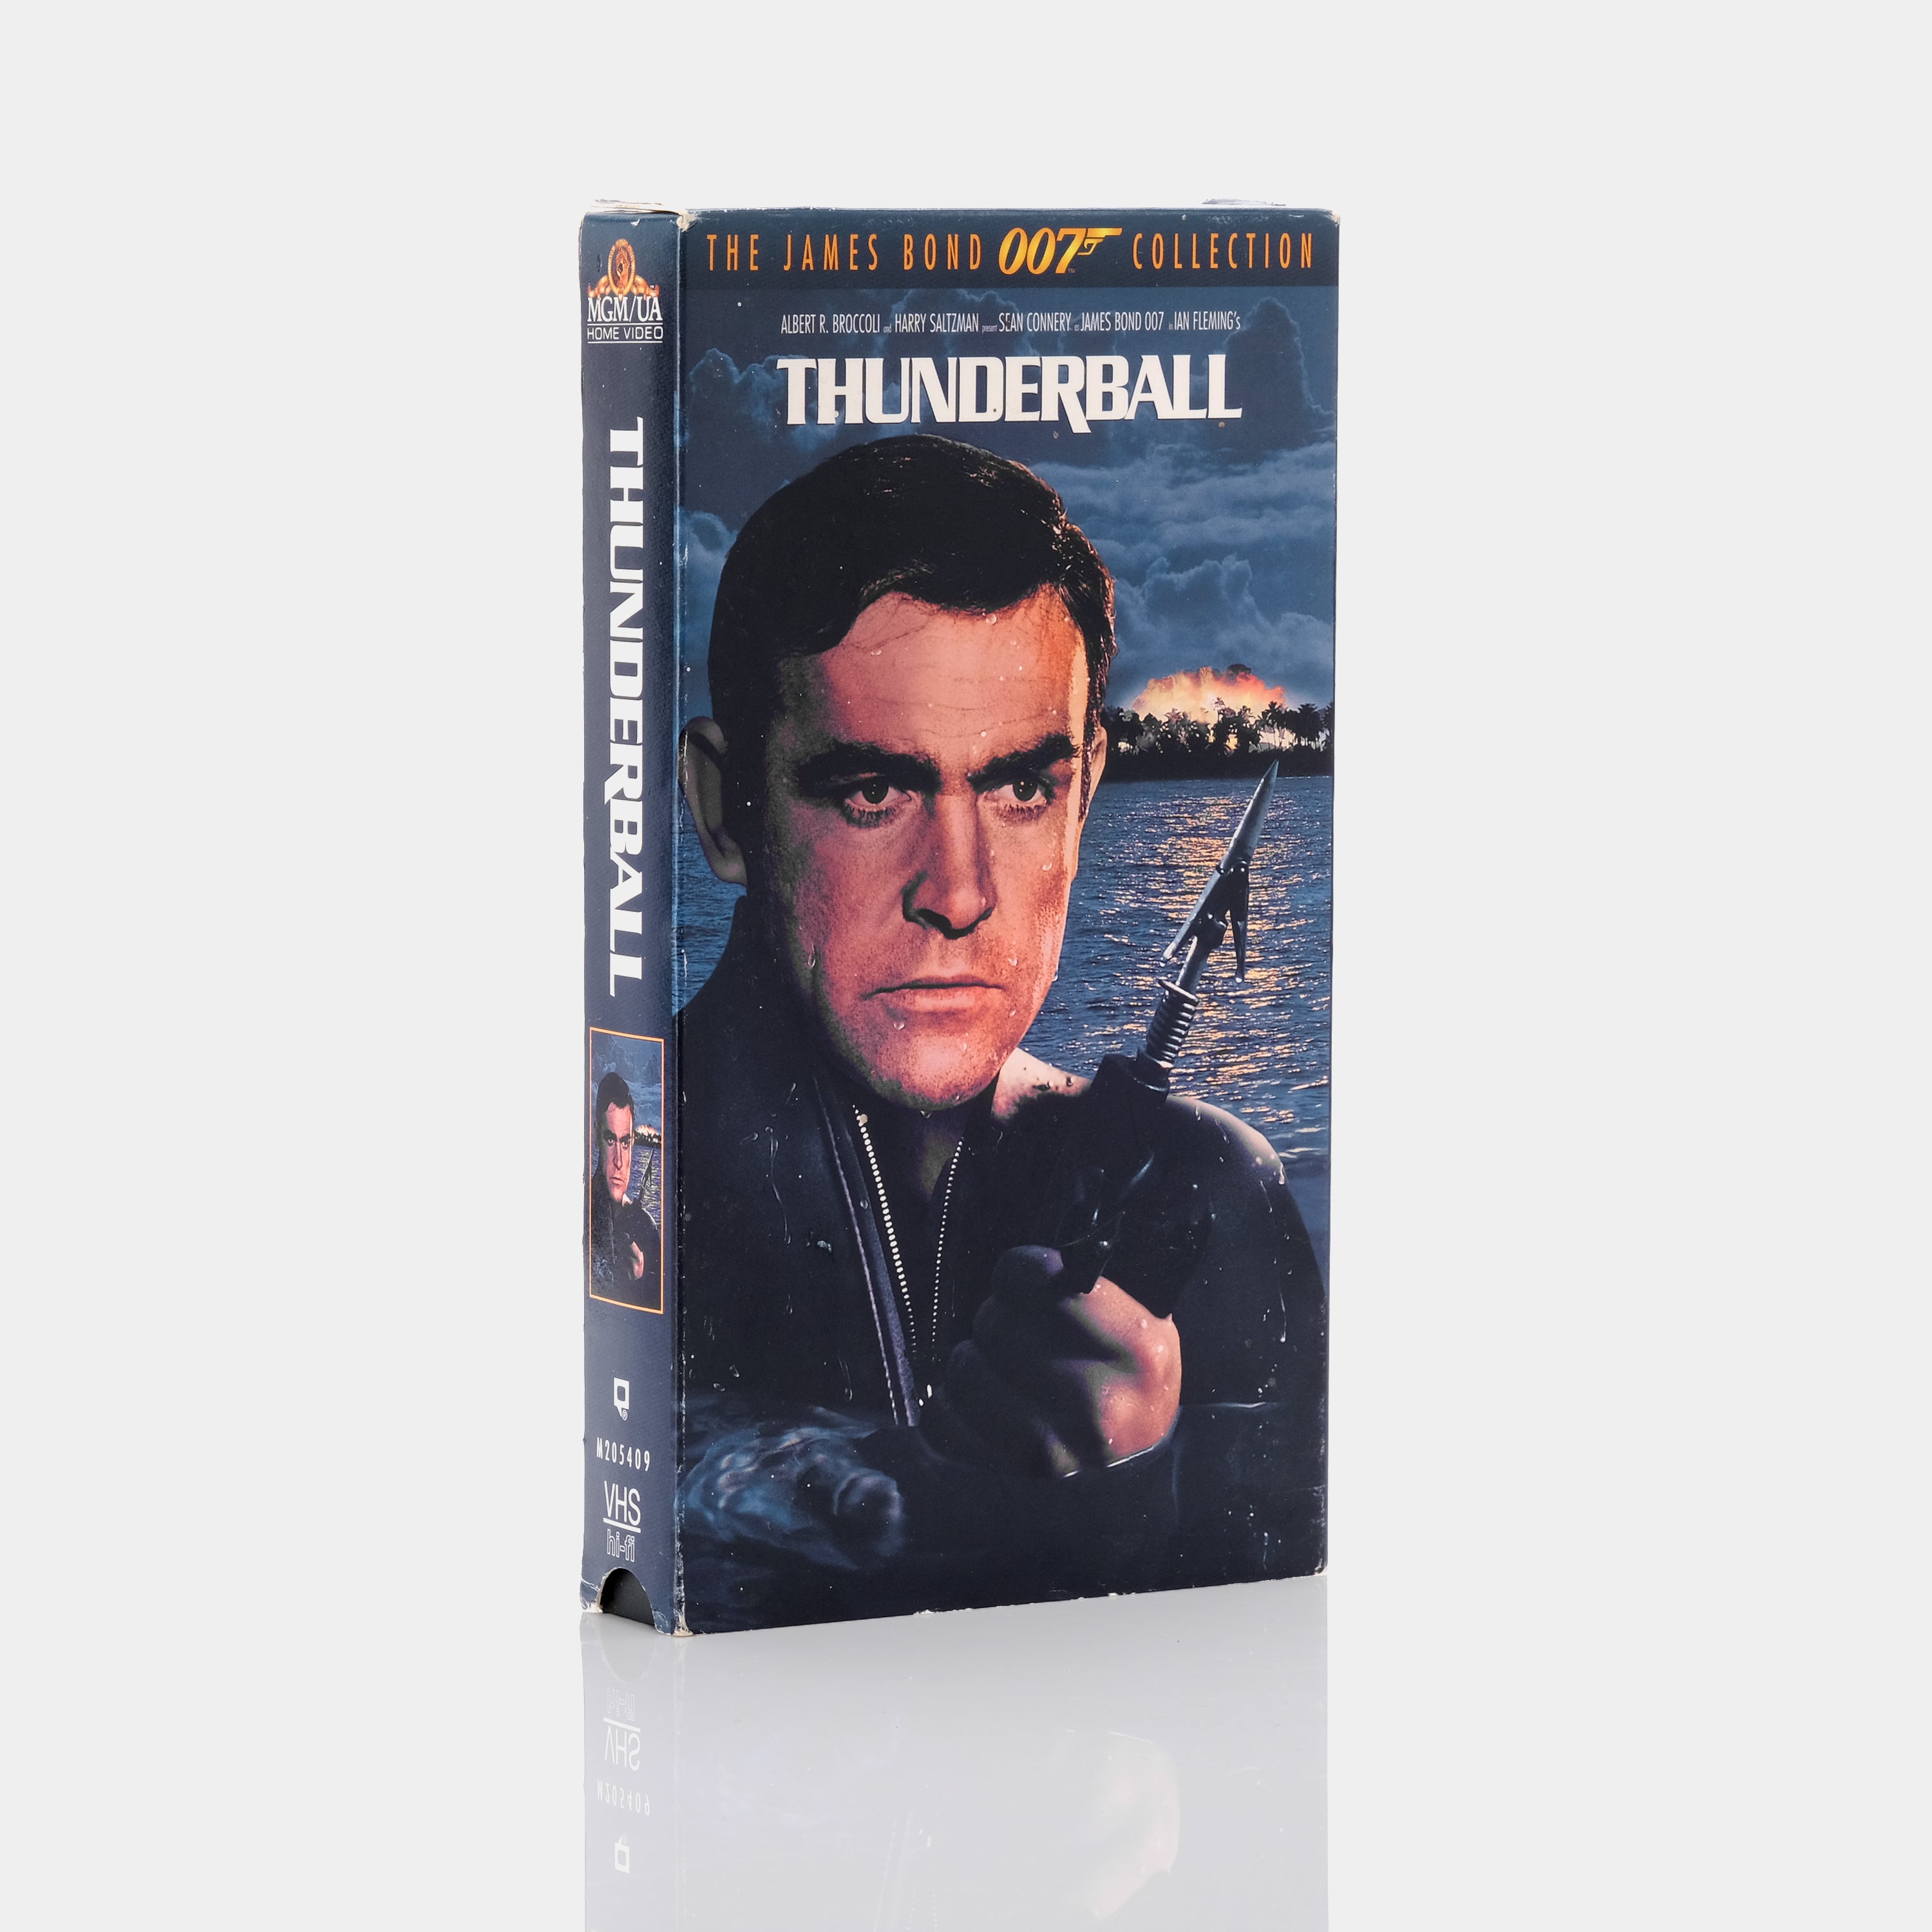 Thunderball VHS Tape